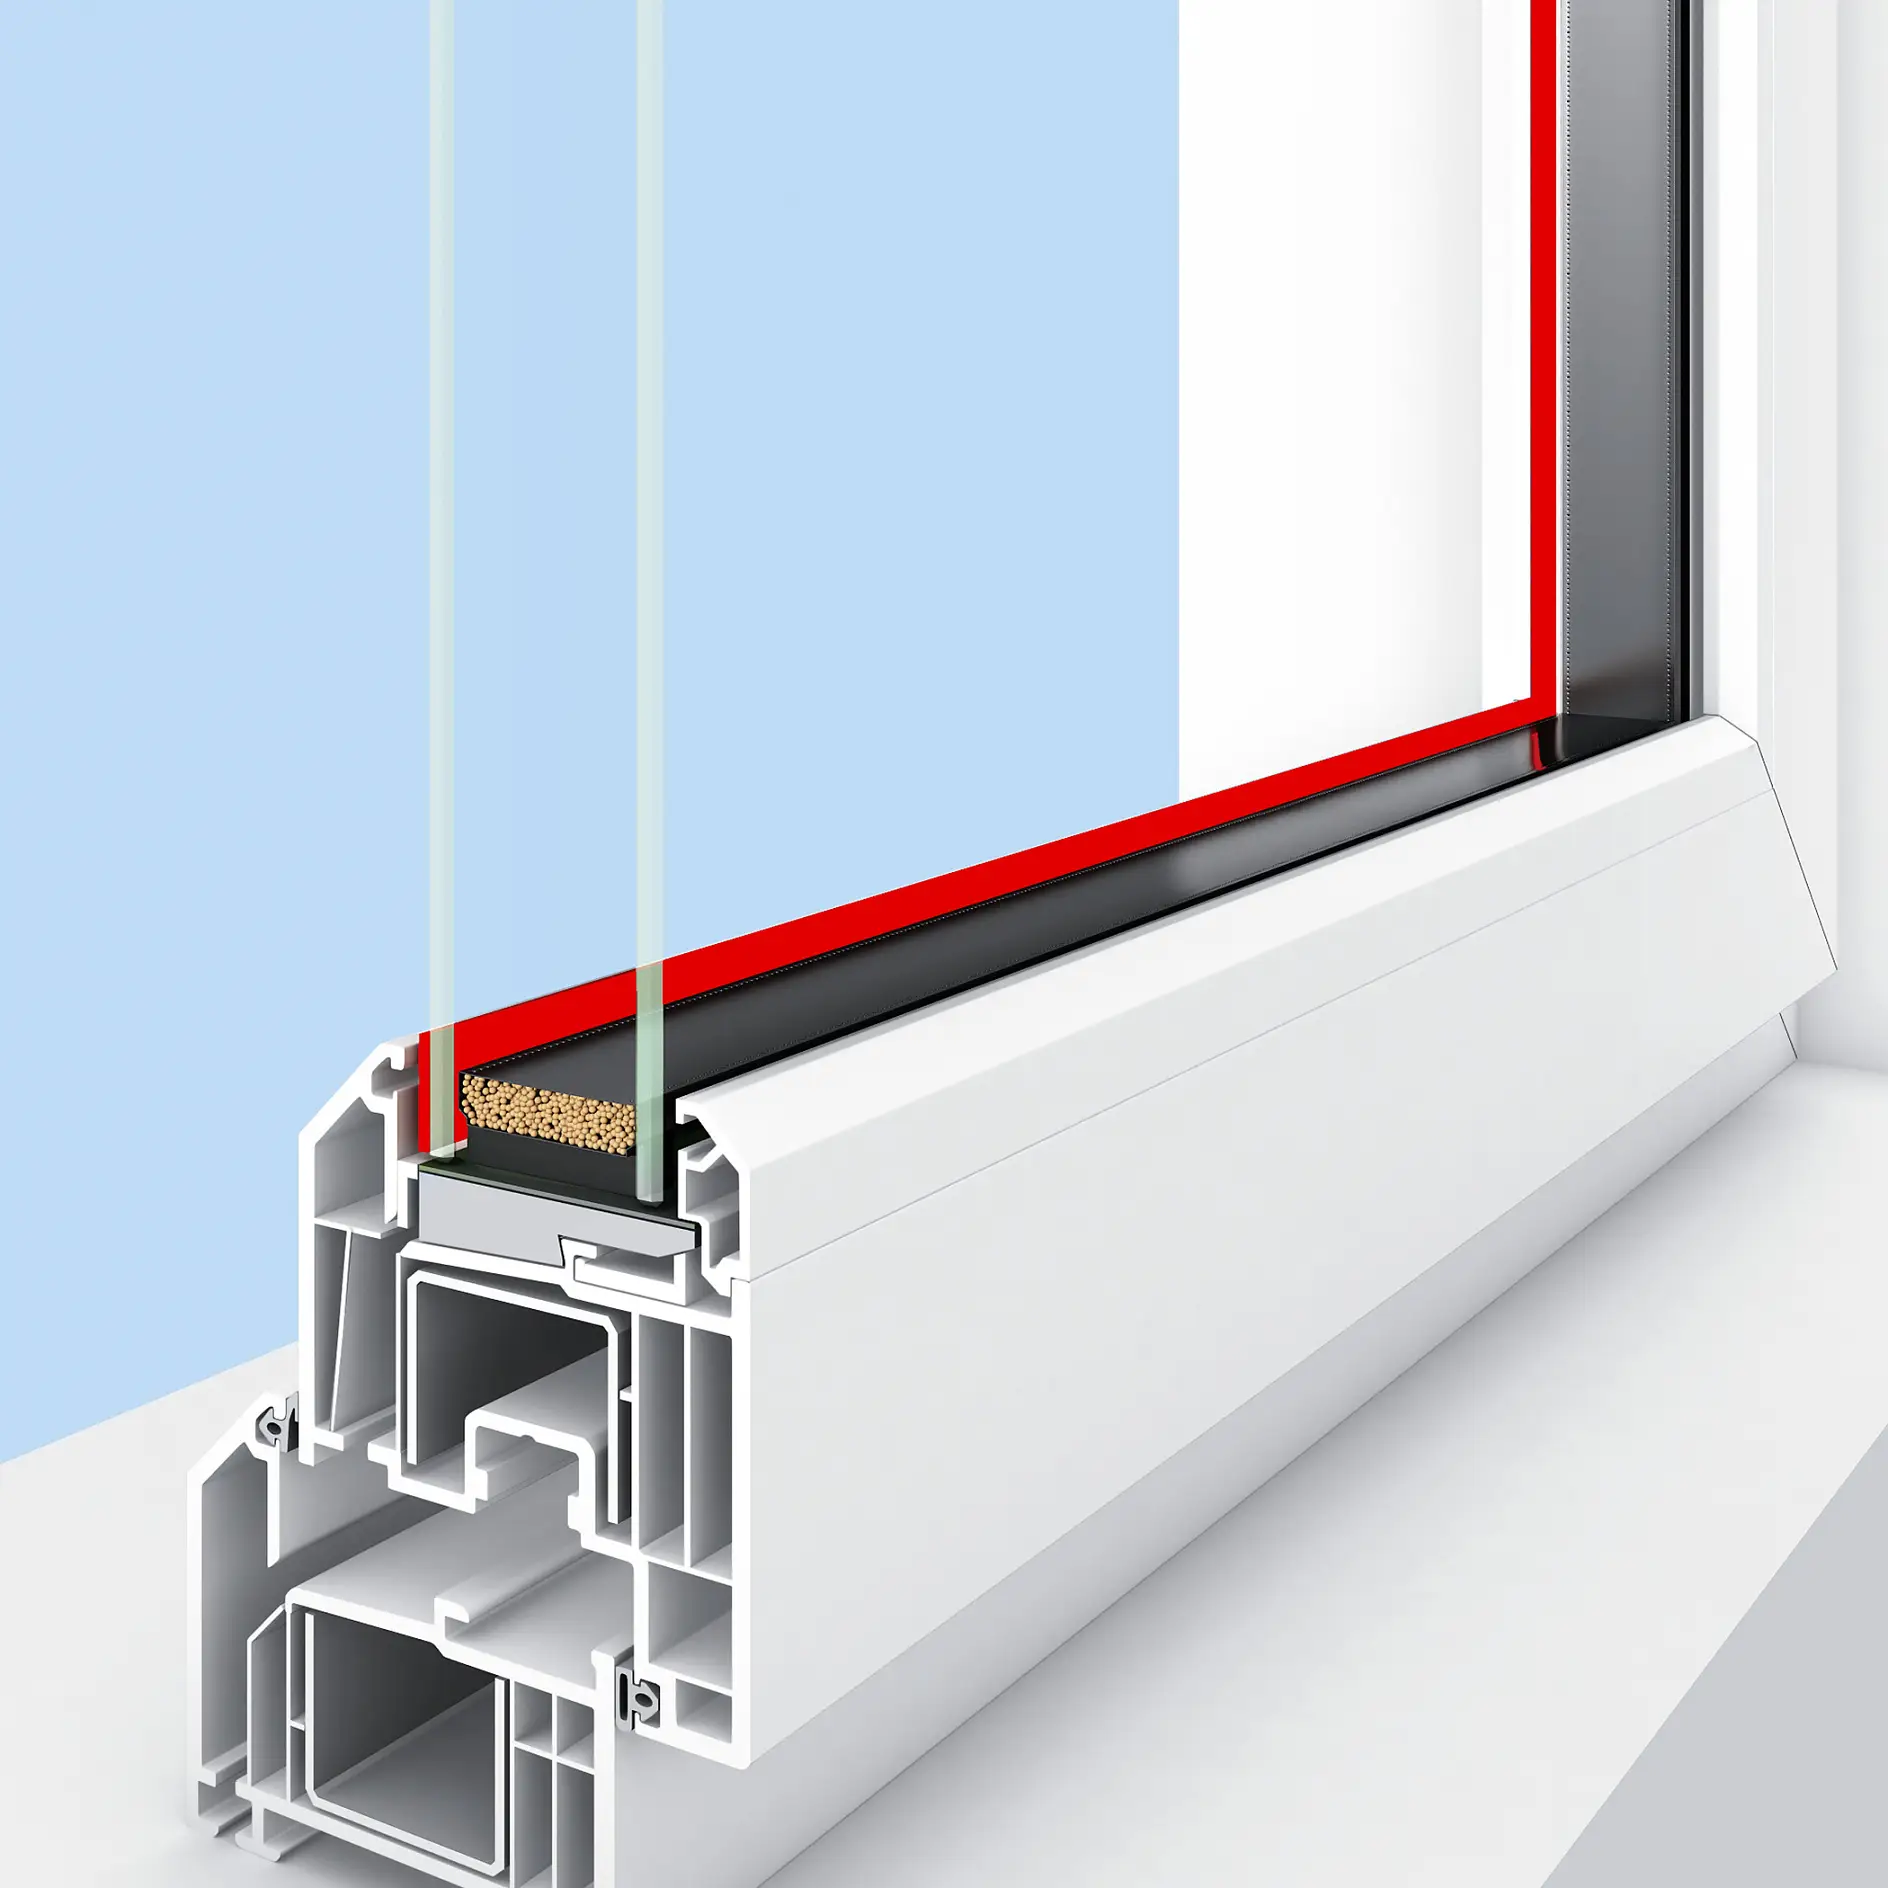 Dry glazing nelle finestre in PVC